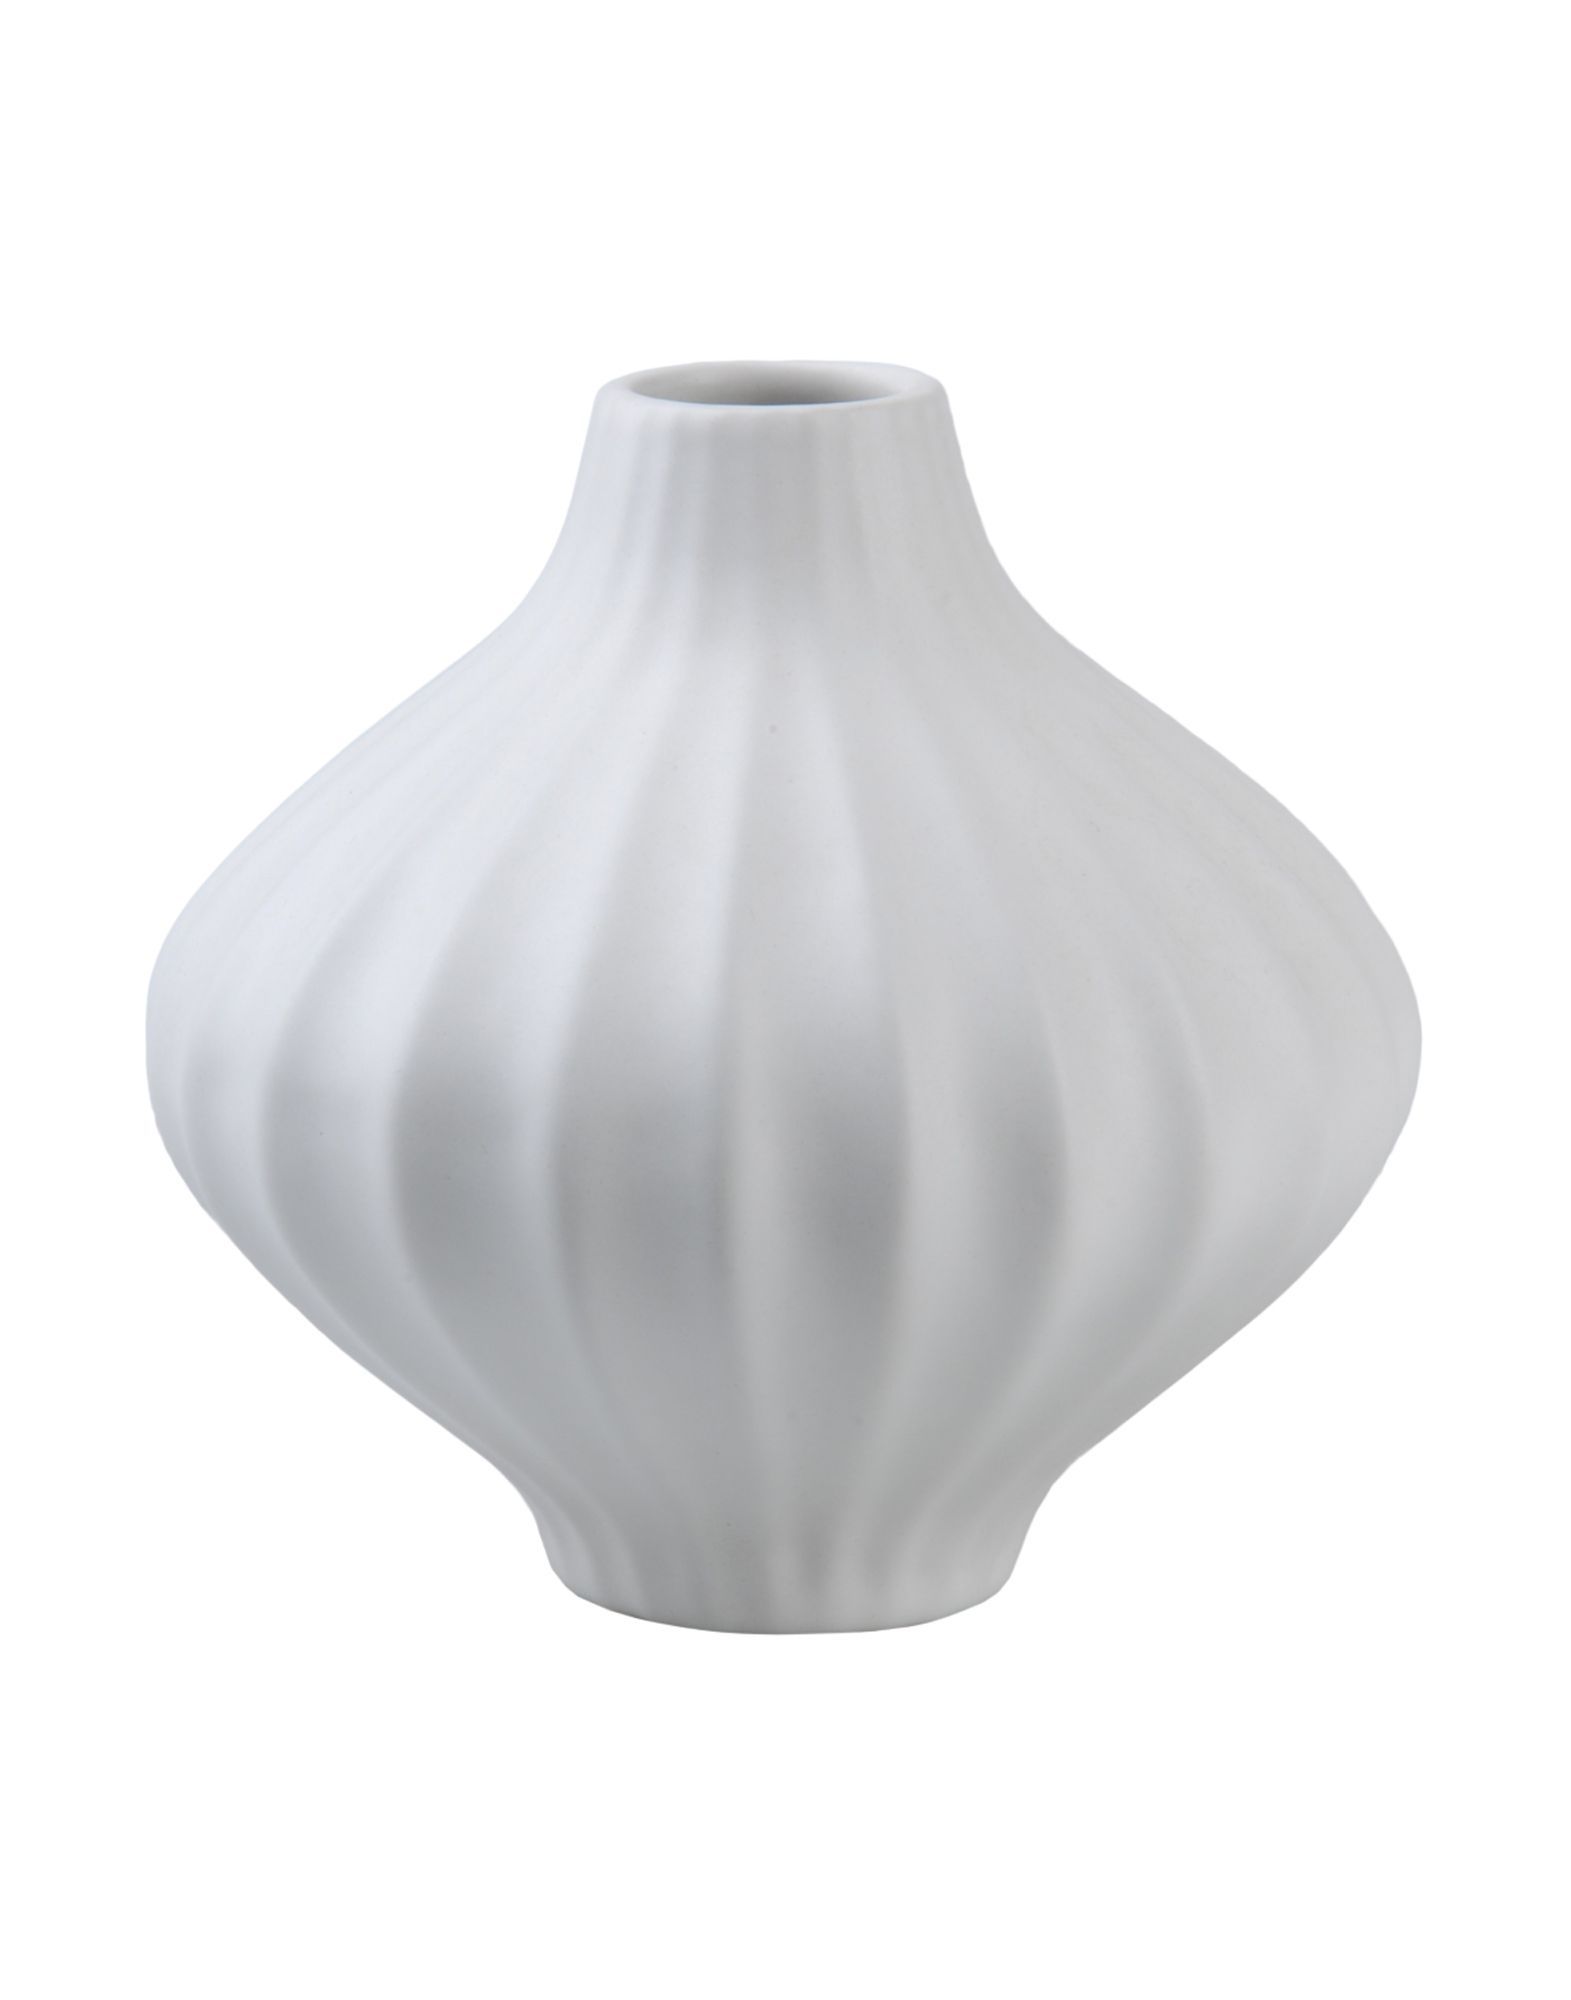 JONATHAN ADLER Vases | YOOX (US)